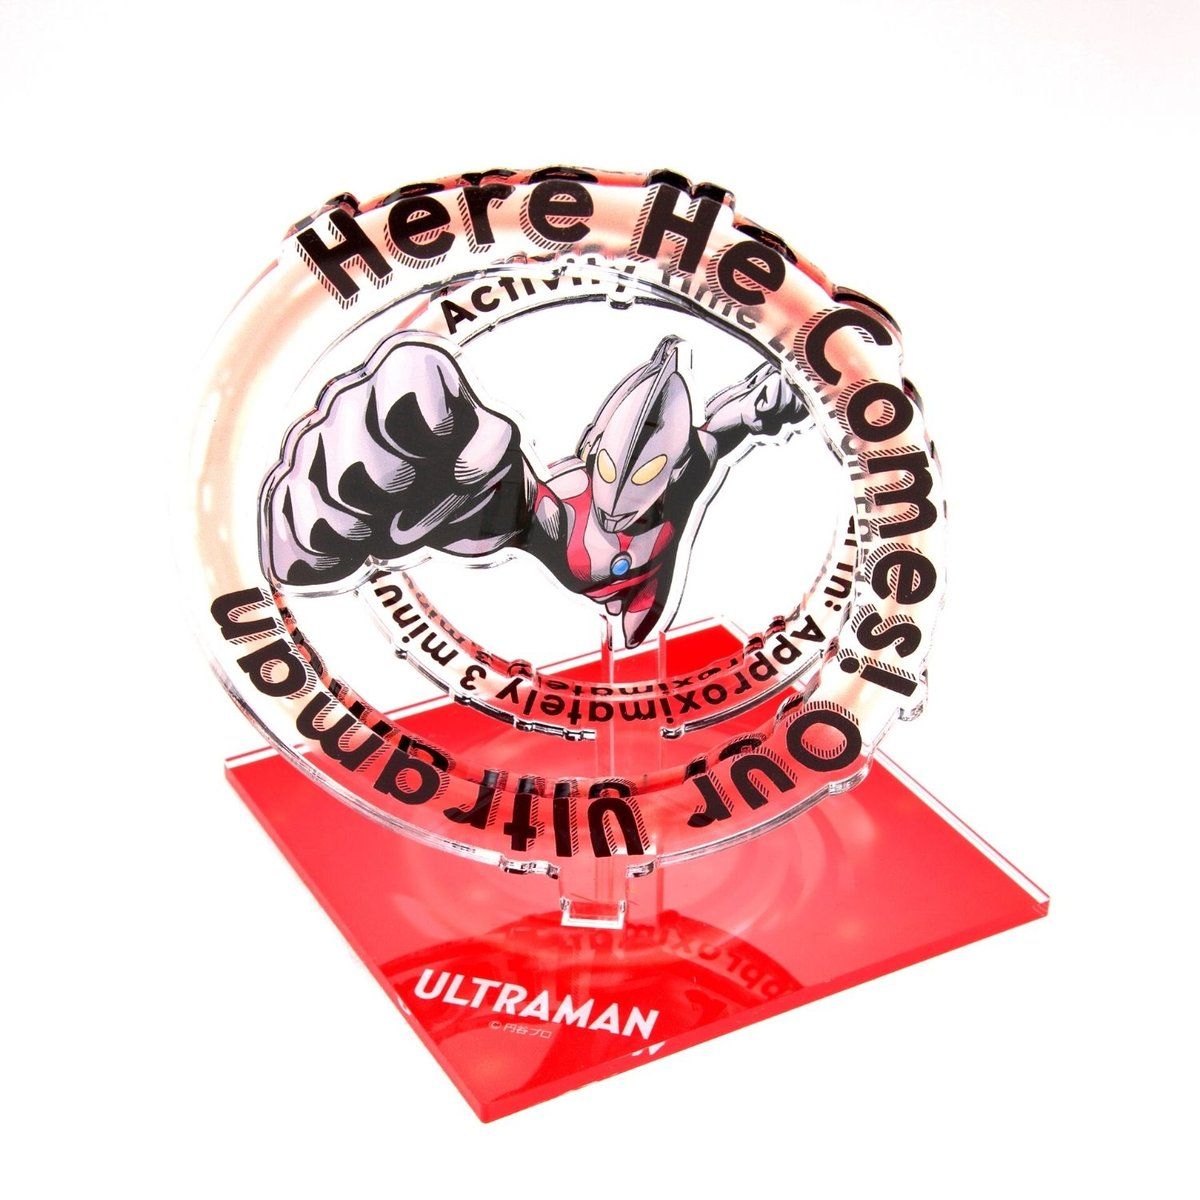 Ultraman Dramatic Acrylic Dimension Display